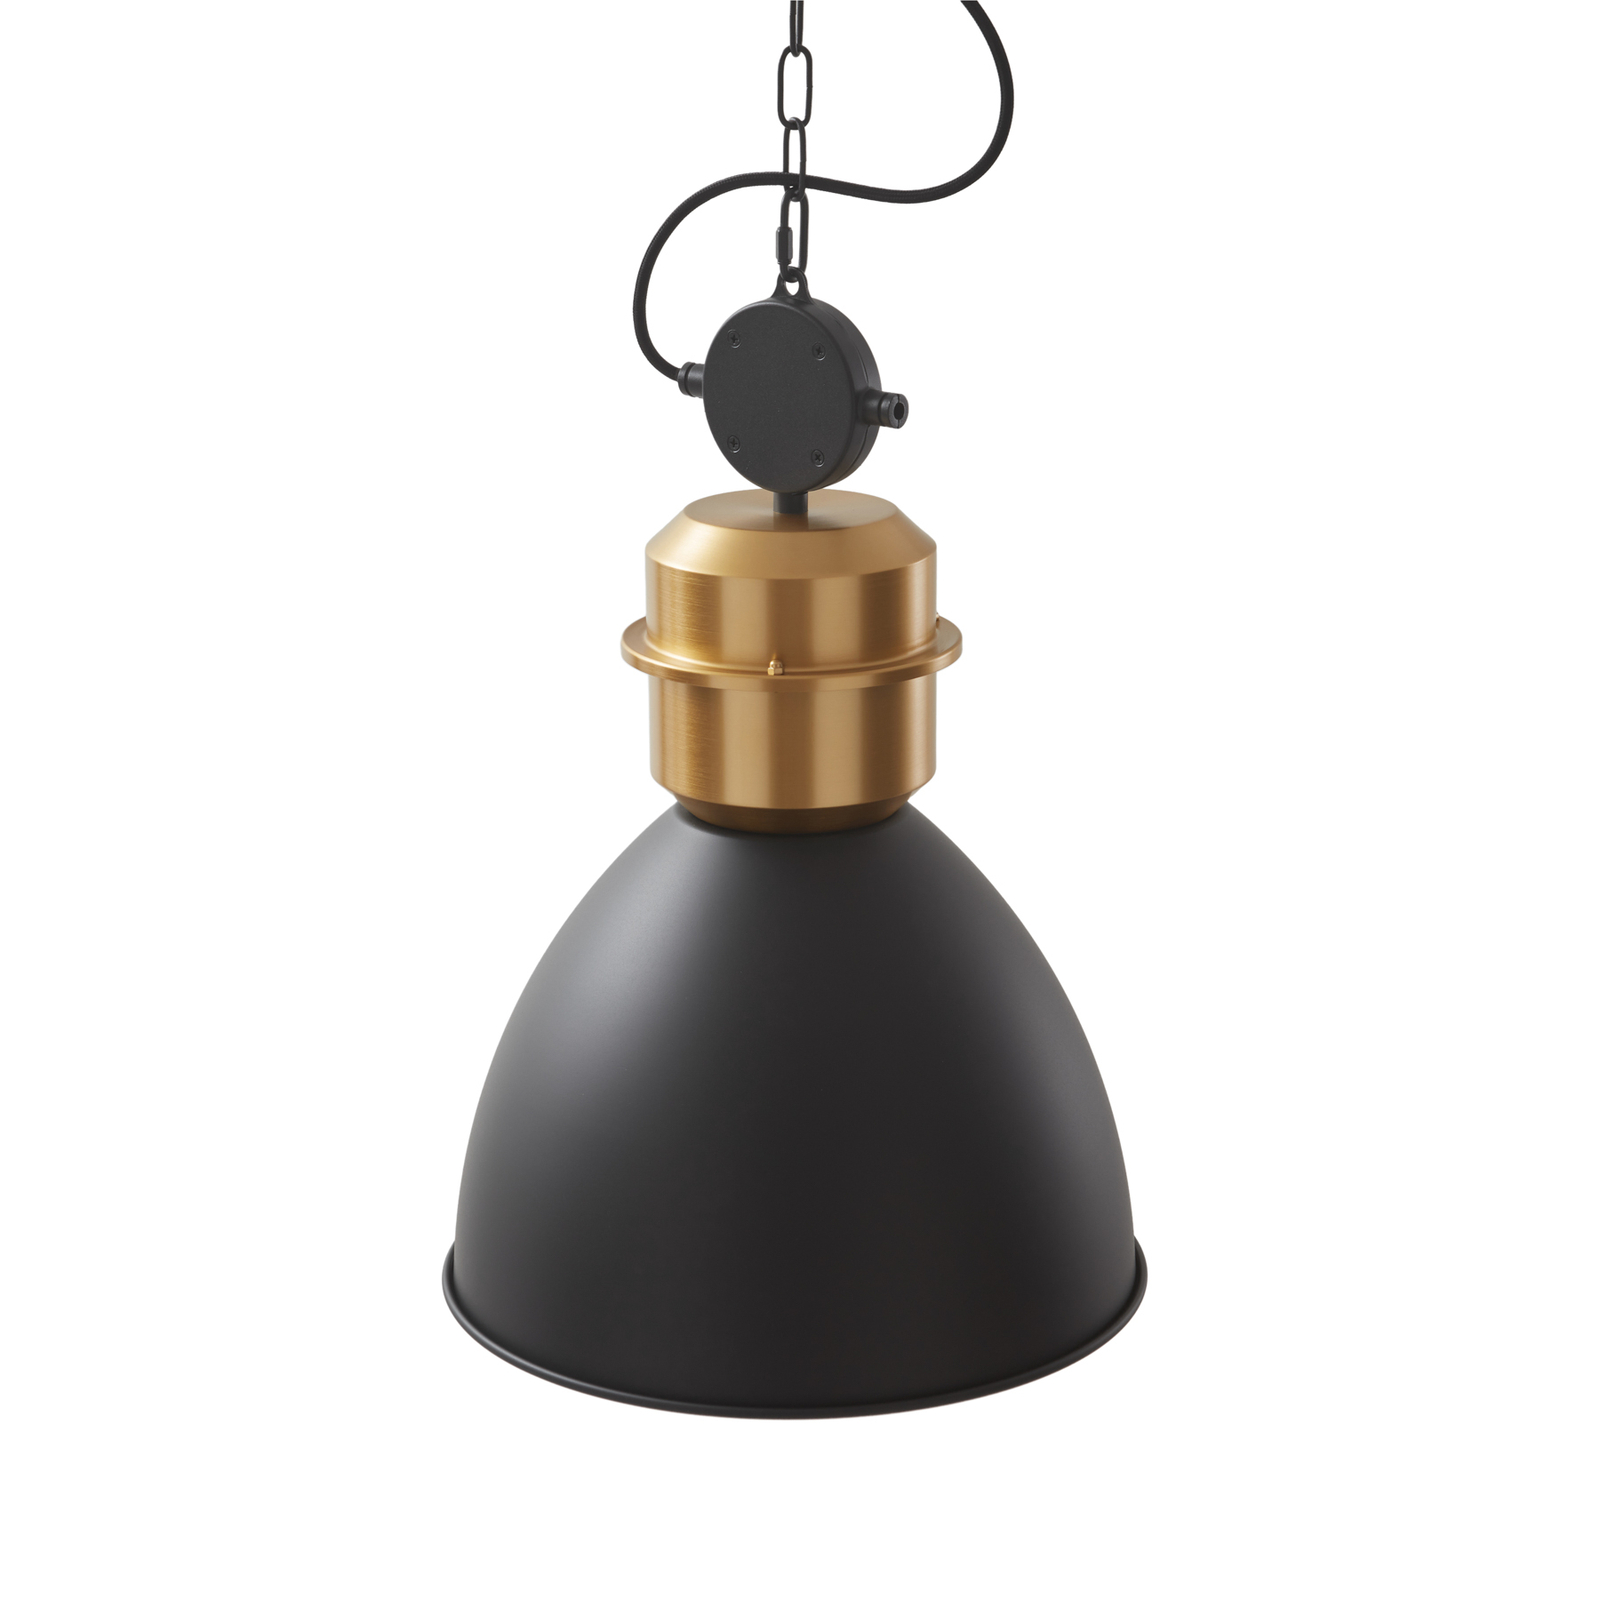 Lucande pendant light Kaeloria, black/brass, aluminium, Ø 35 cm